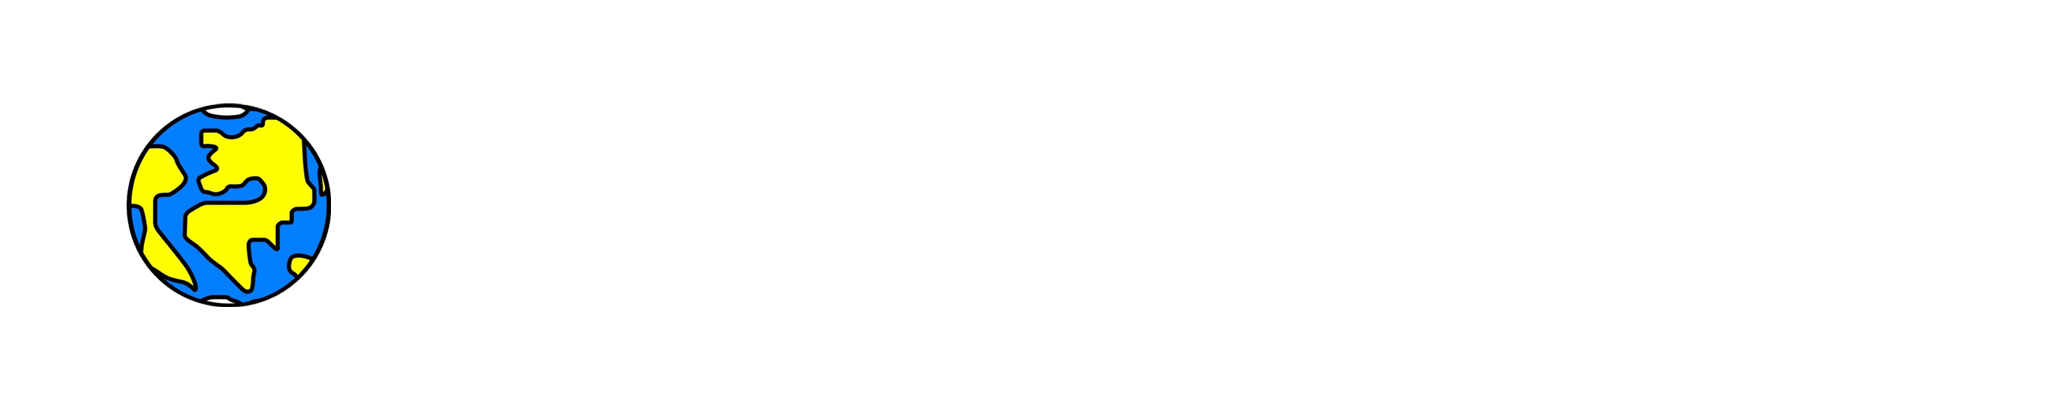 One Planet Cafe logo